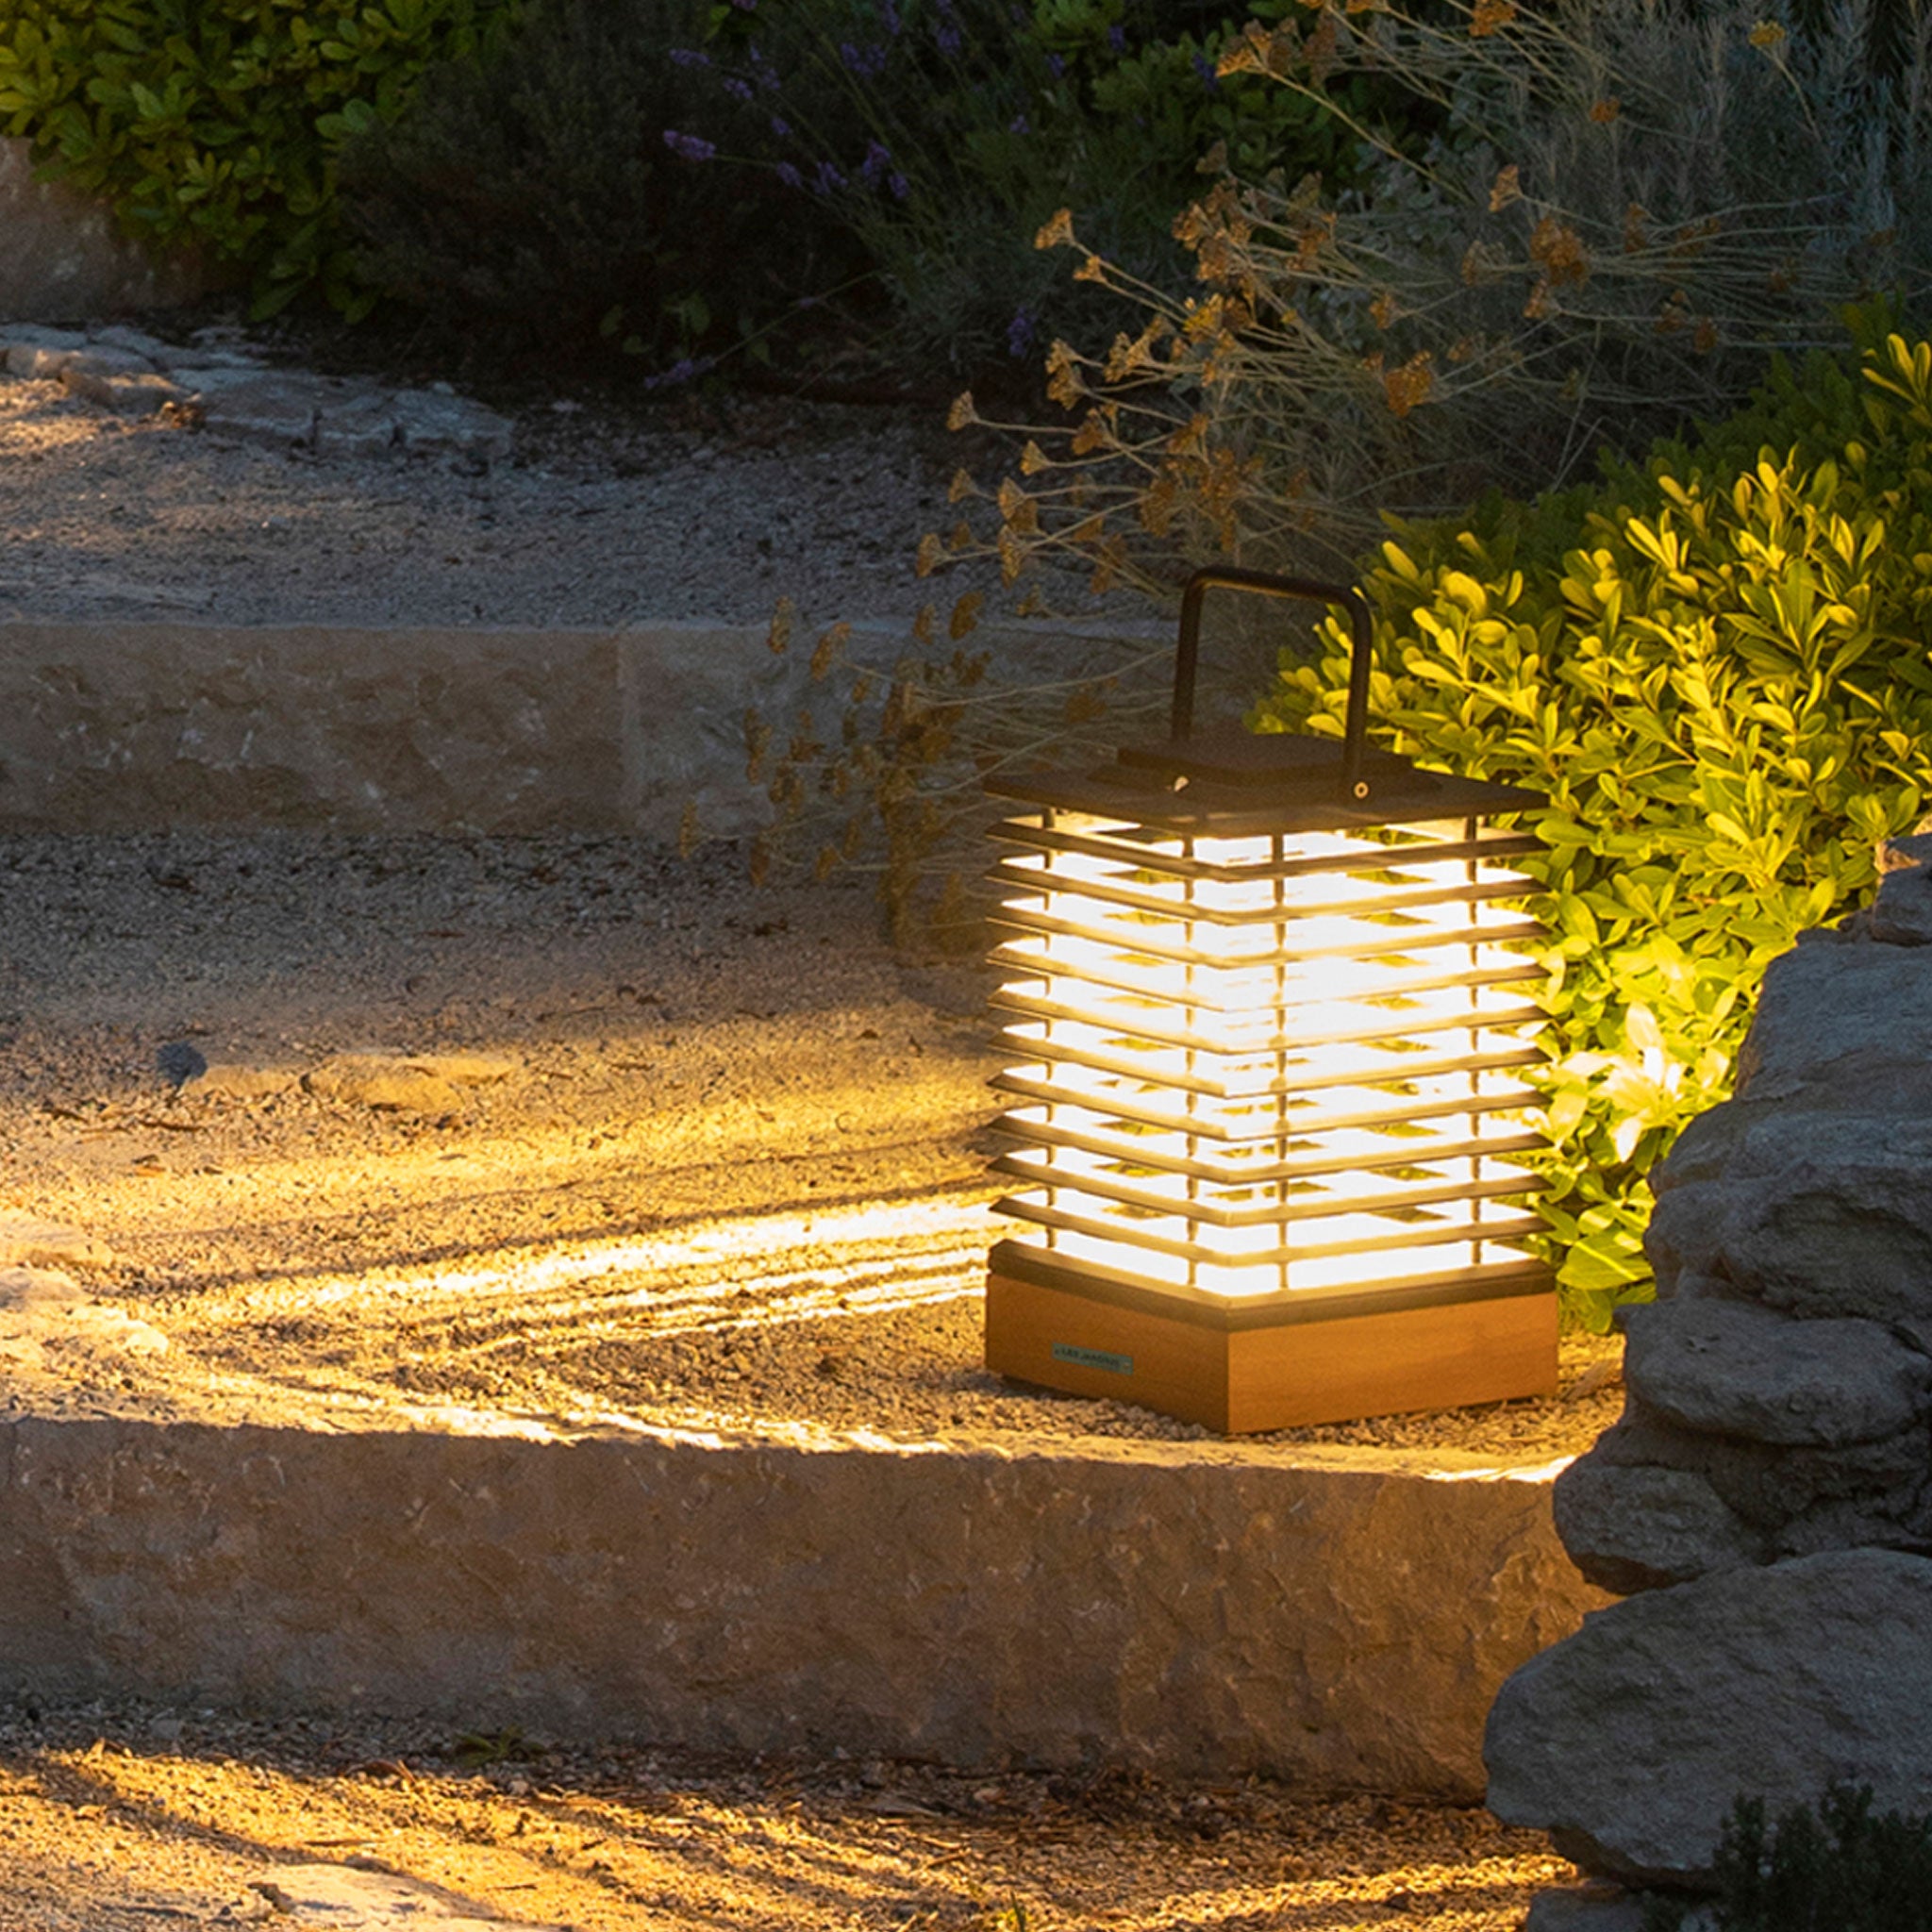 High efficiency tekura lantern in small, teak lighting up pathway